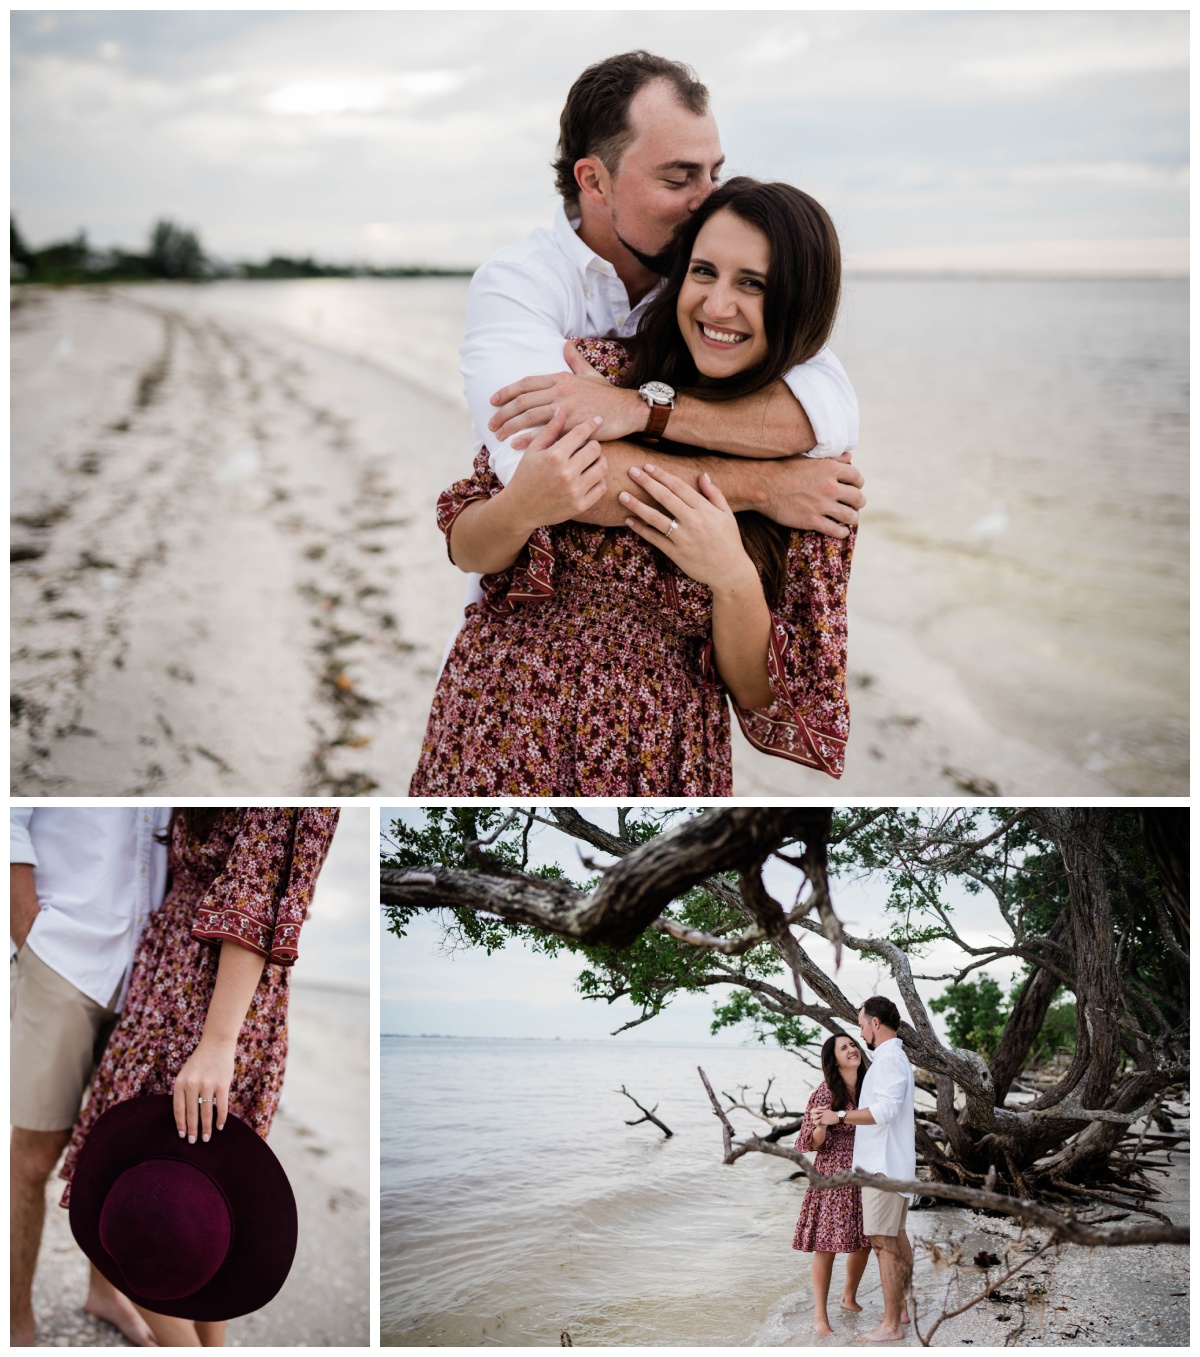 Southwest Florida beach engagement photos taken by Fort Myers wedding photographer